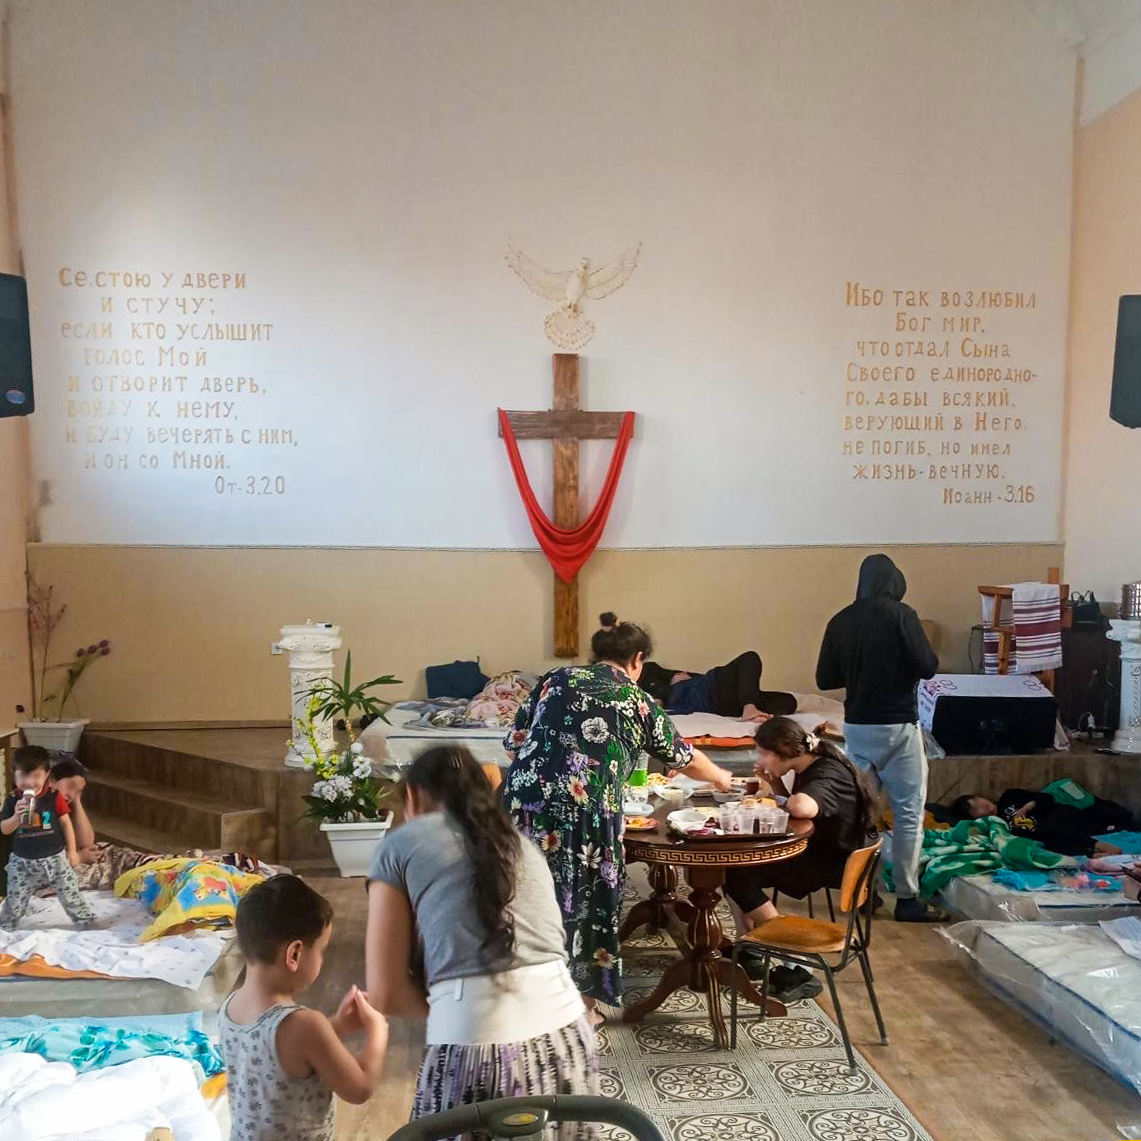 Refugees receive care inside a church in western Ukraine